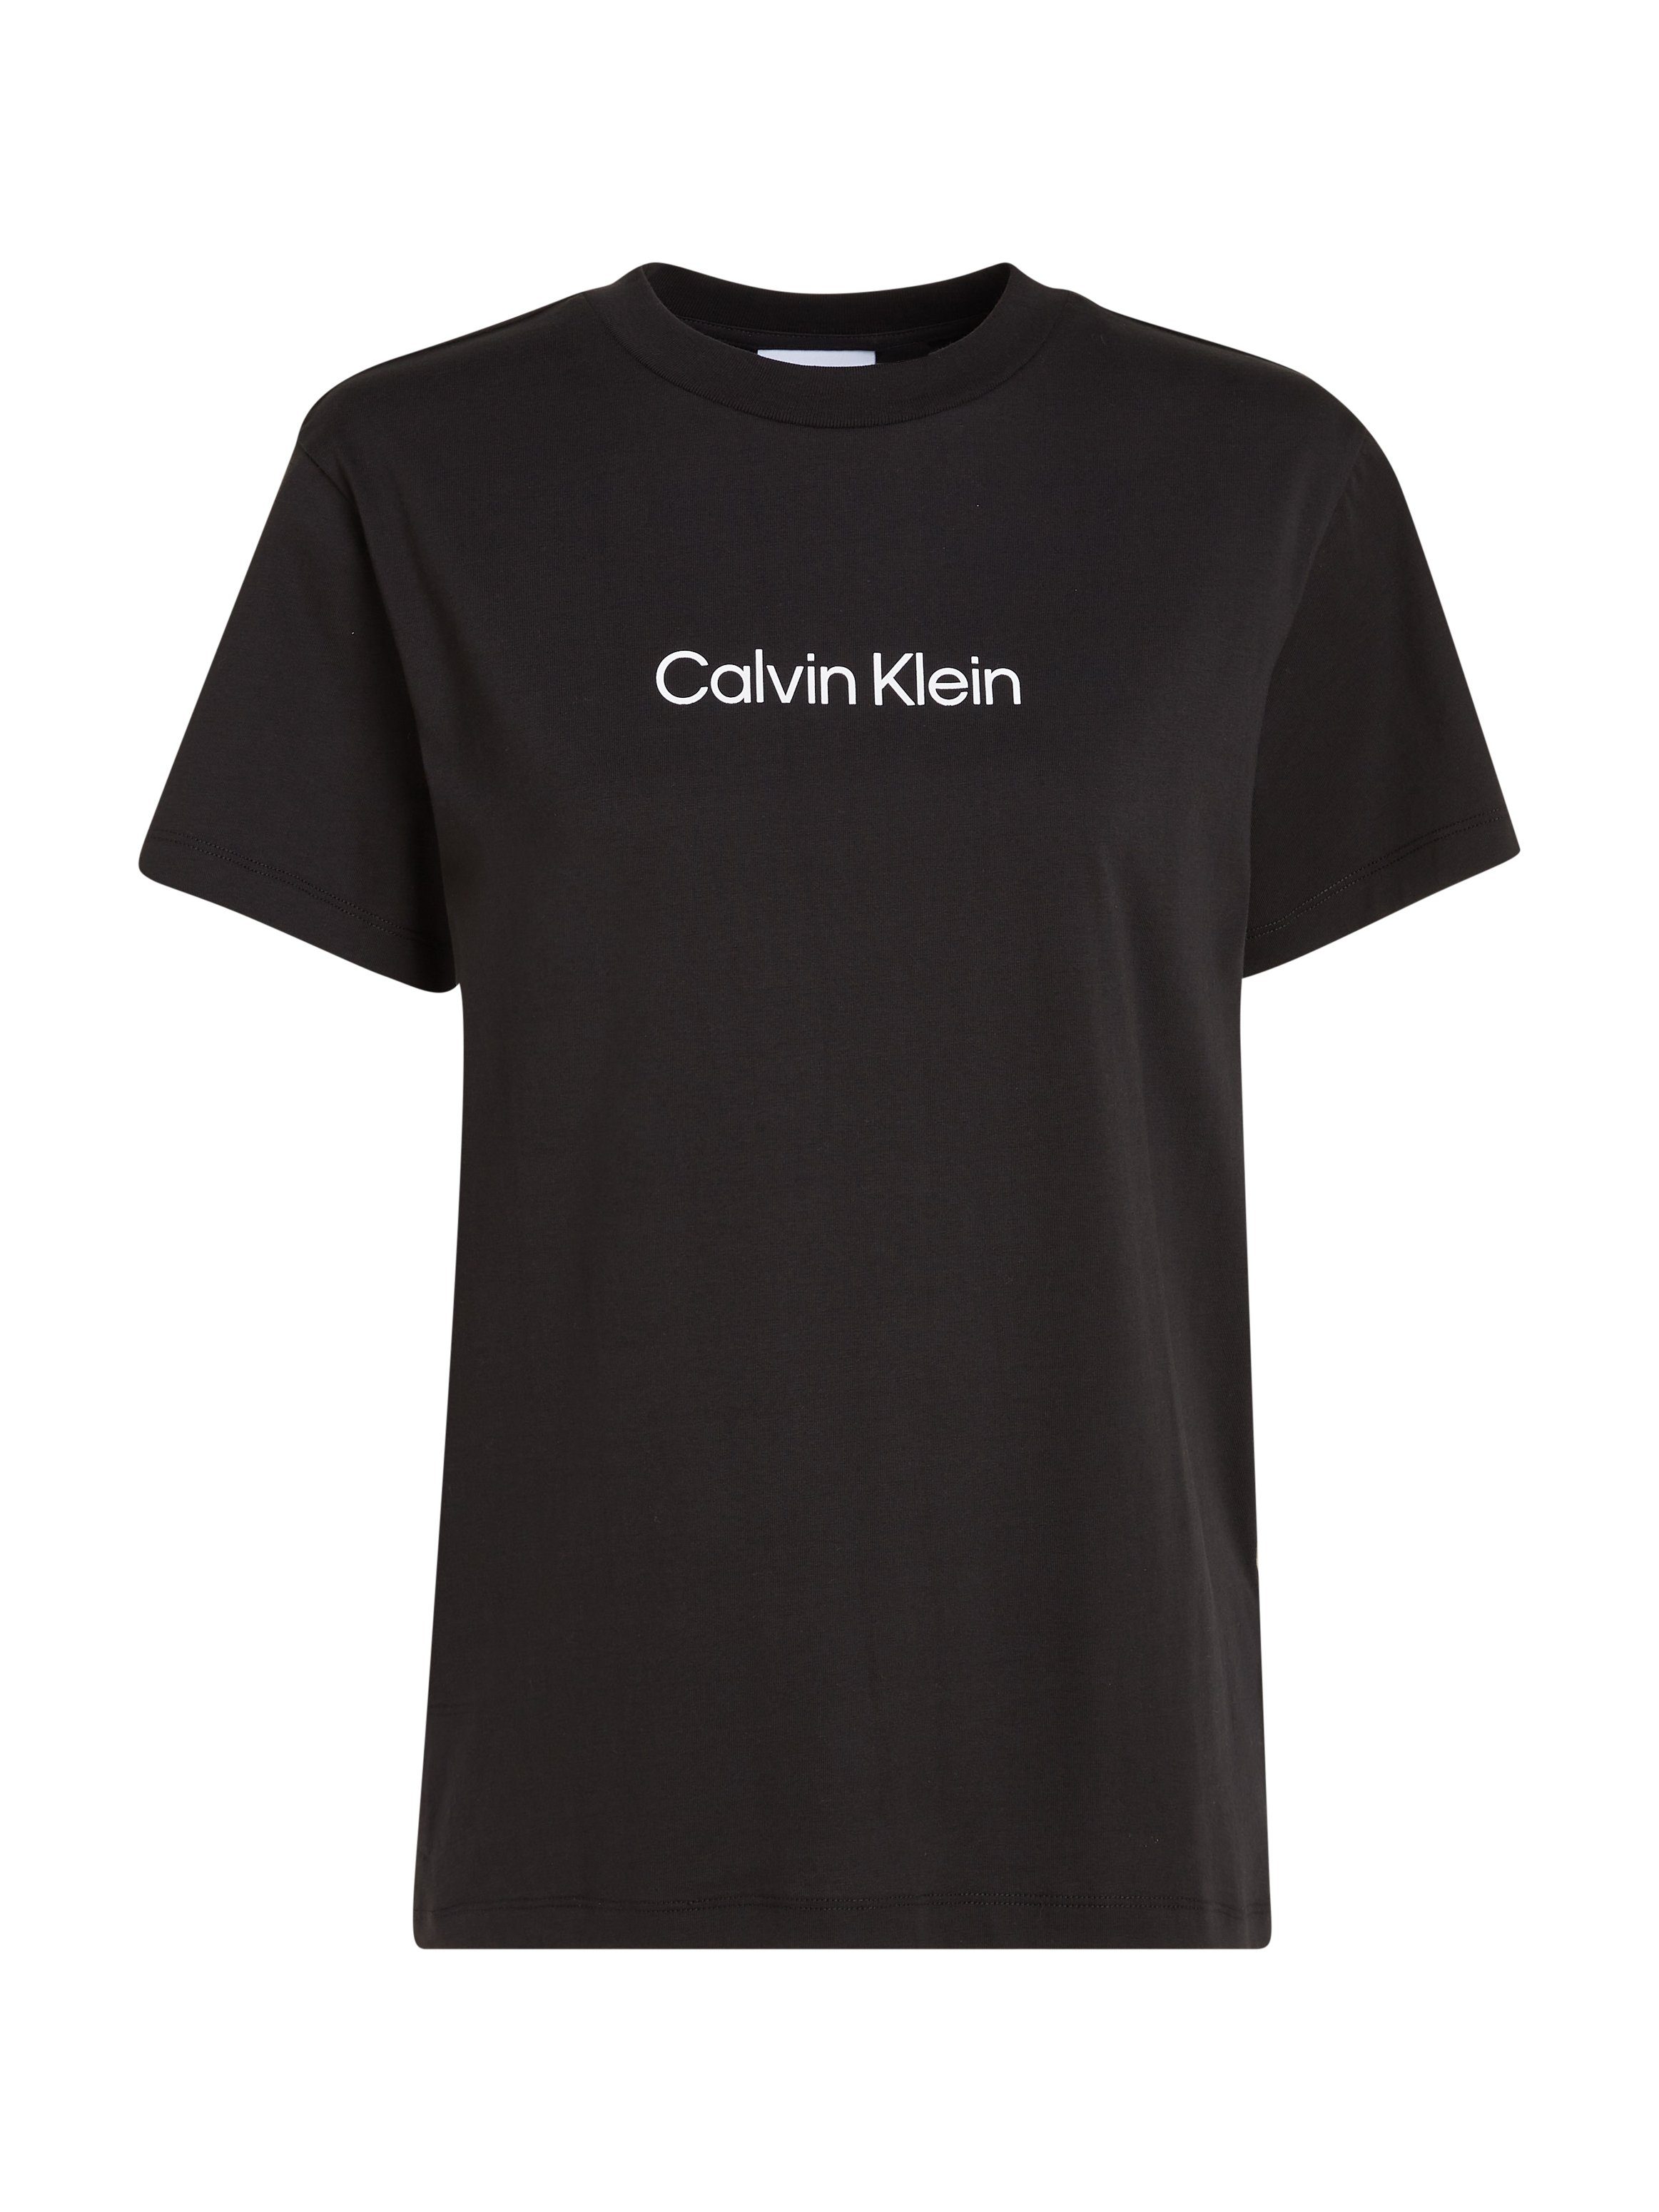 Calvin Klein T-Shirt schwarz Shirt HERO LOGO REGULAR